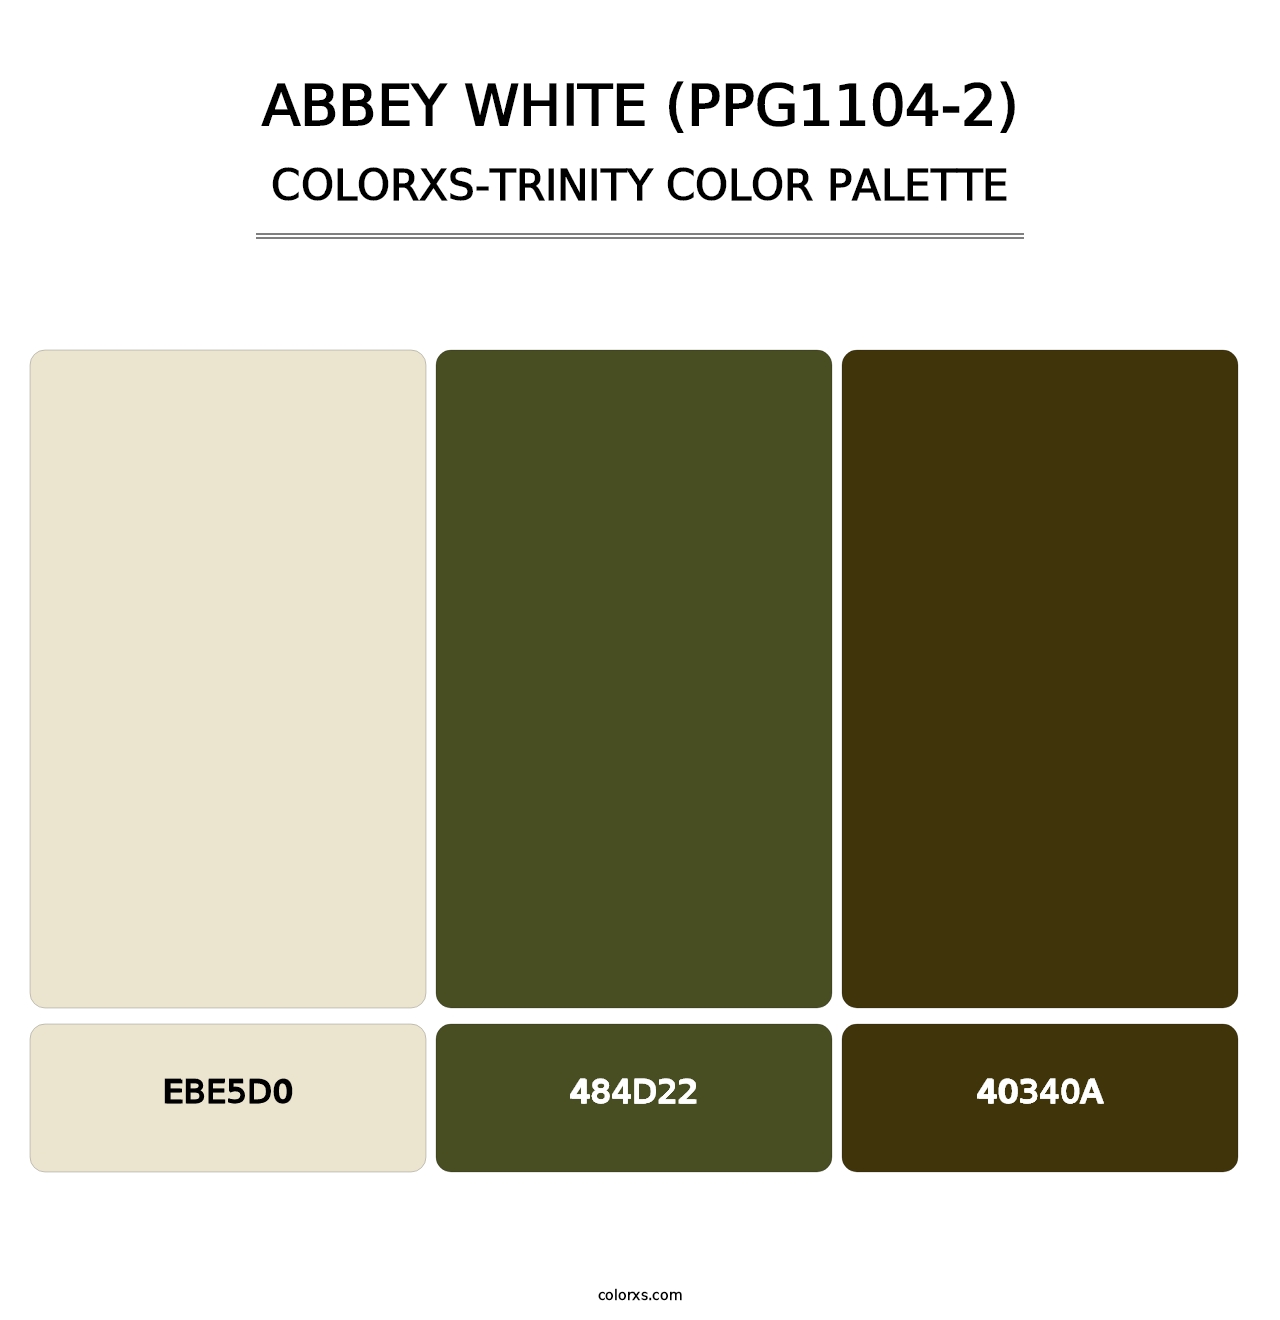 Abbey White (PPG1104-2) - Colorxs Trinity Palette